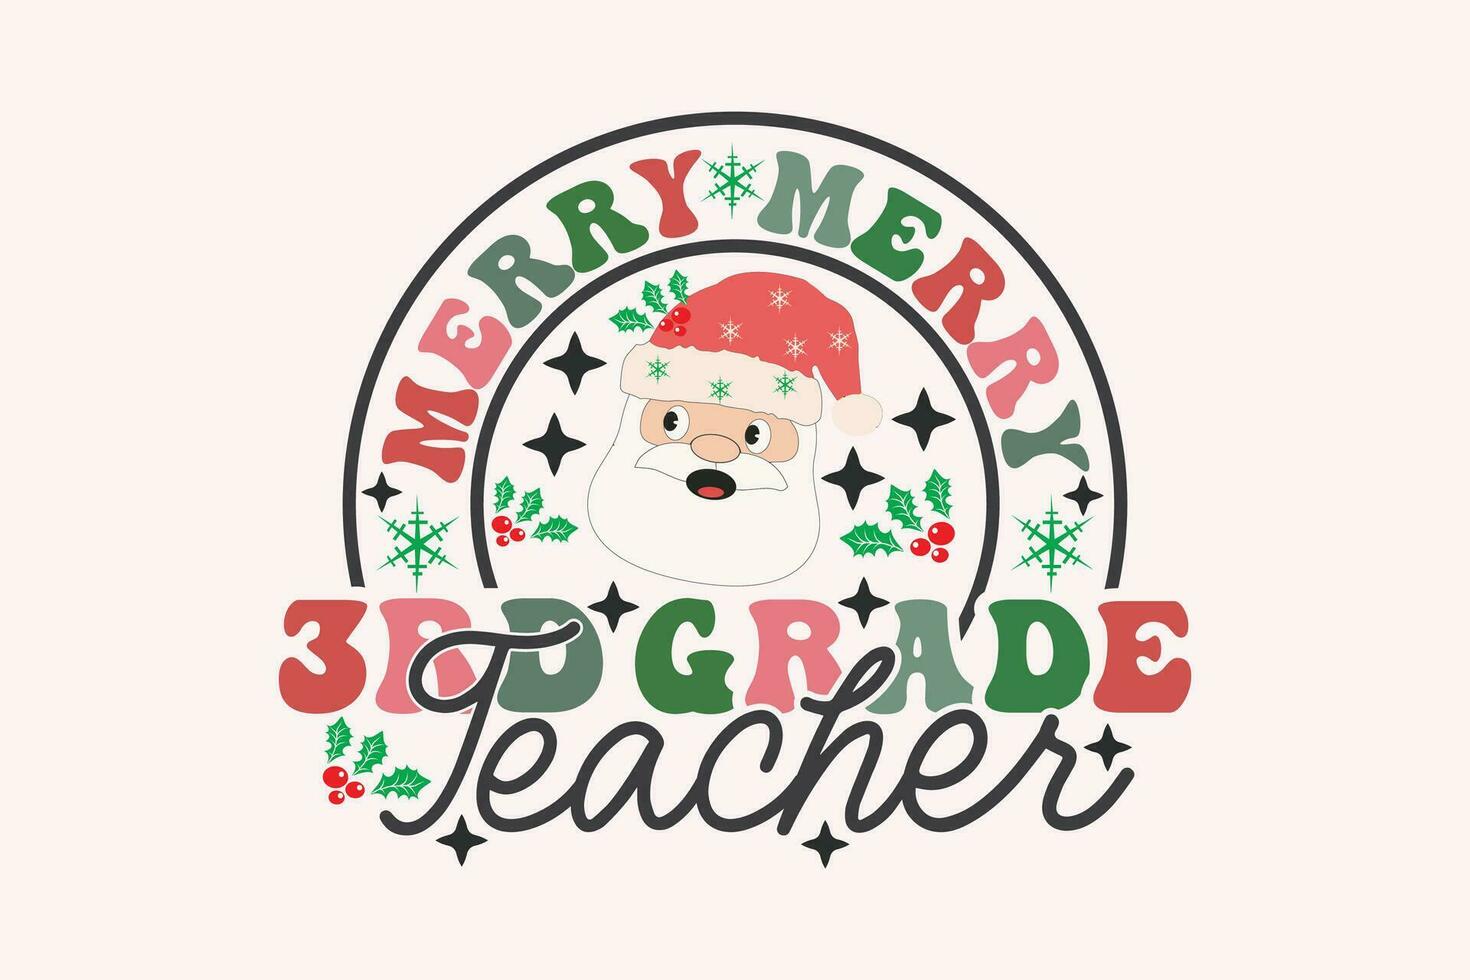 Merry 3rd Grade Teacher Christmas Retro Typography T-shirt design vector